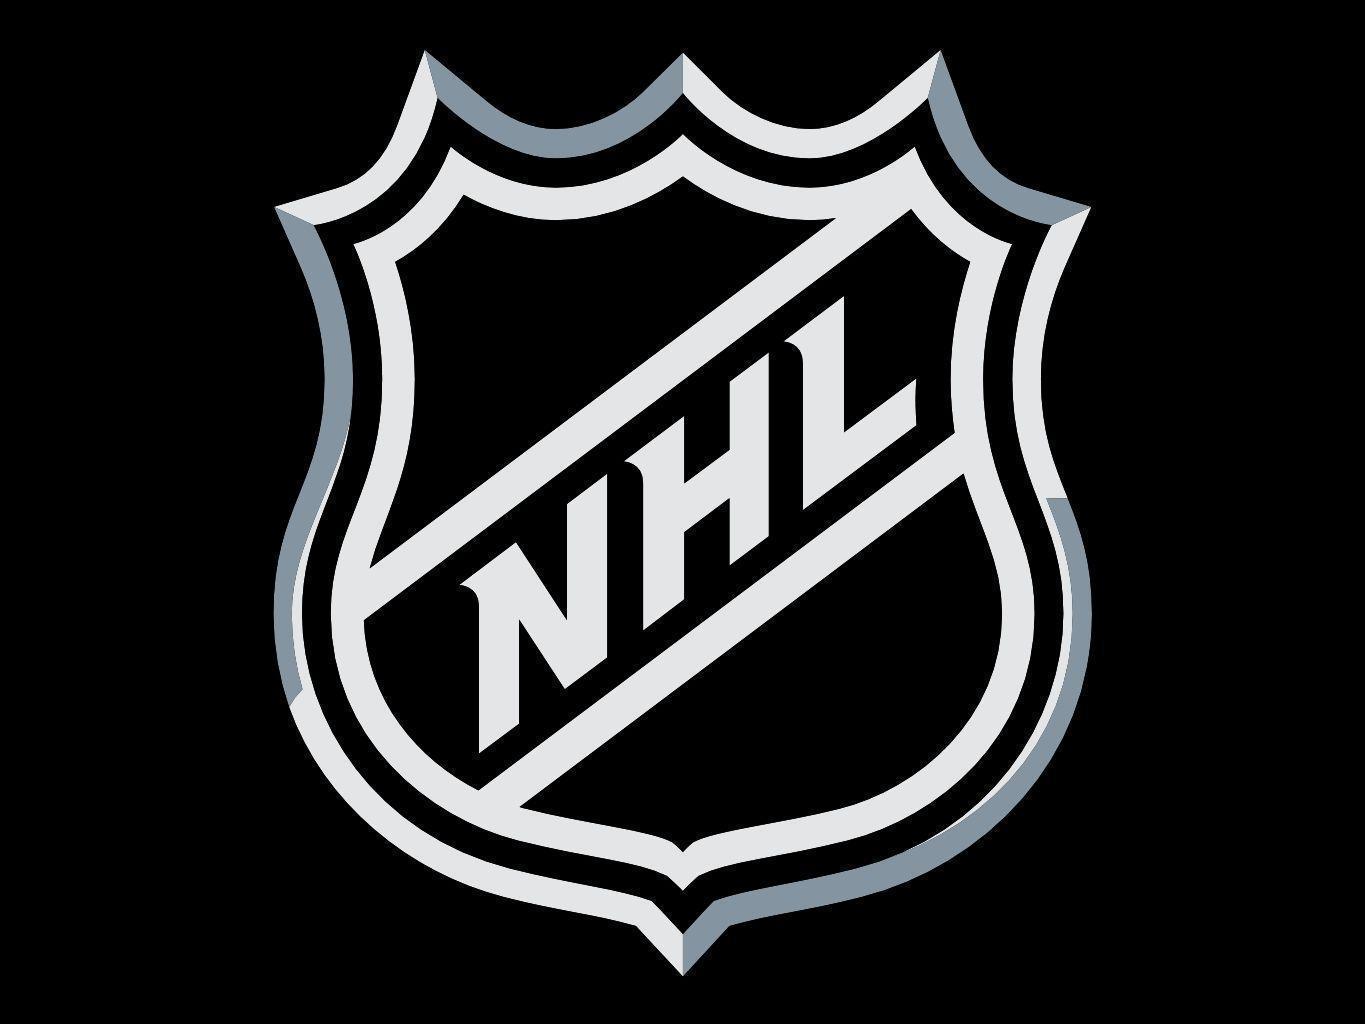 Download wallpaper: NHL logo, wallpaper, download